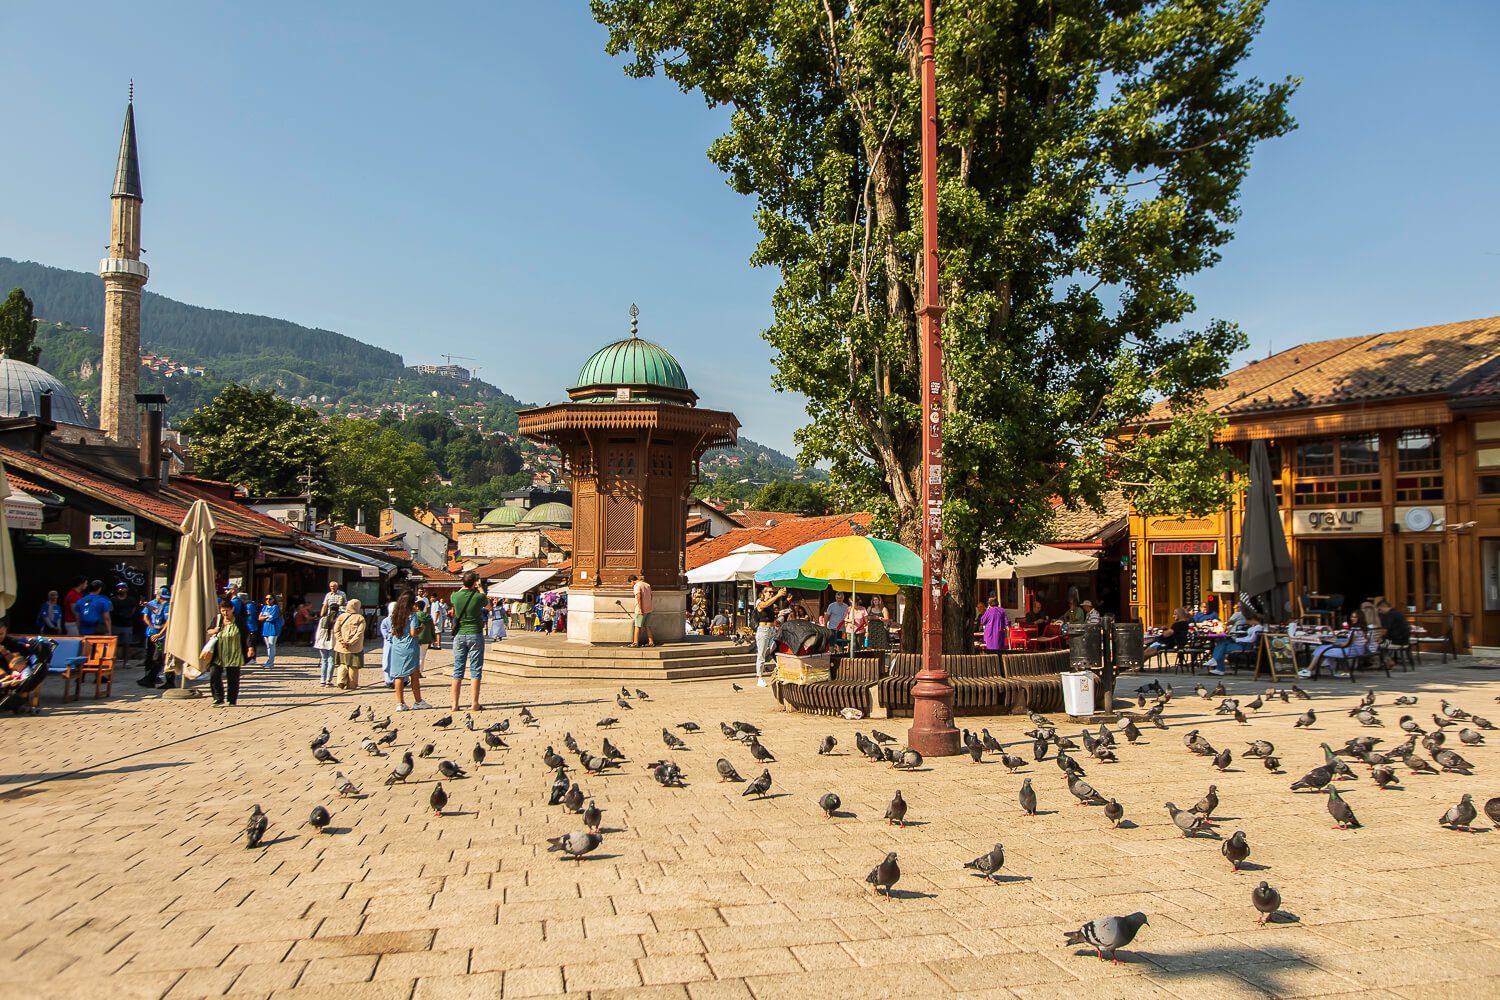 The focal point of Sarajevo